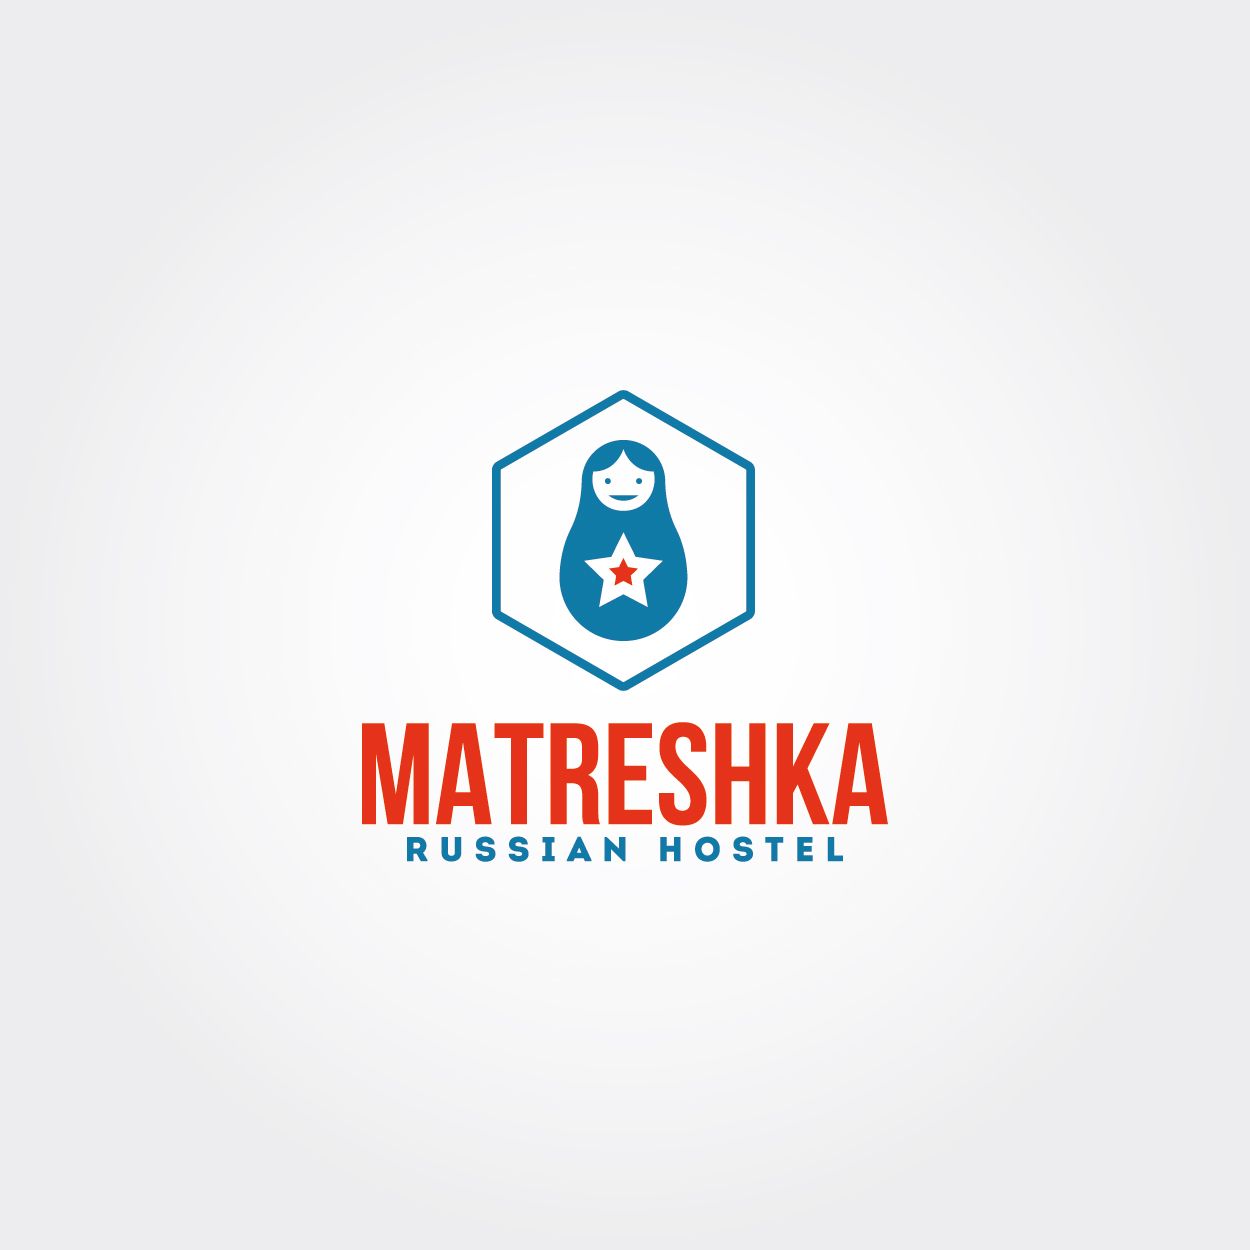 Логотип MATRESHKA Russian hostel - дизайнер klyax